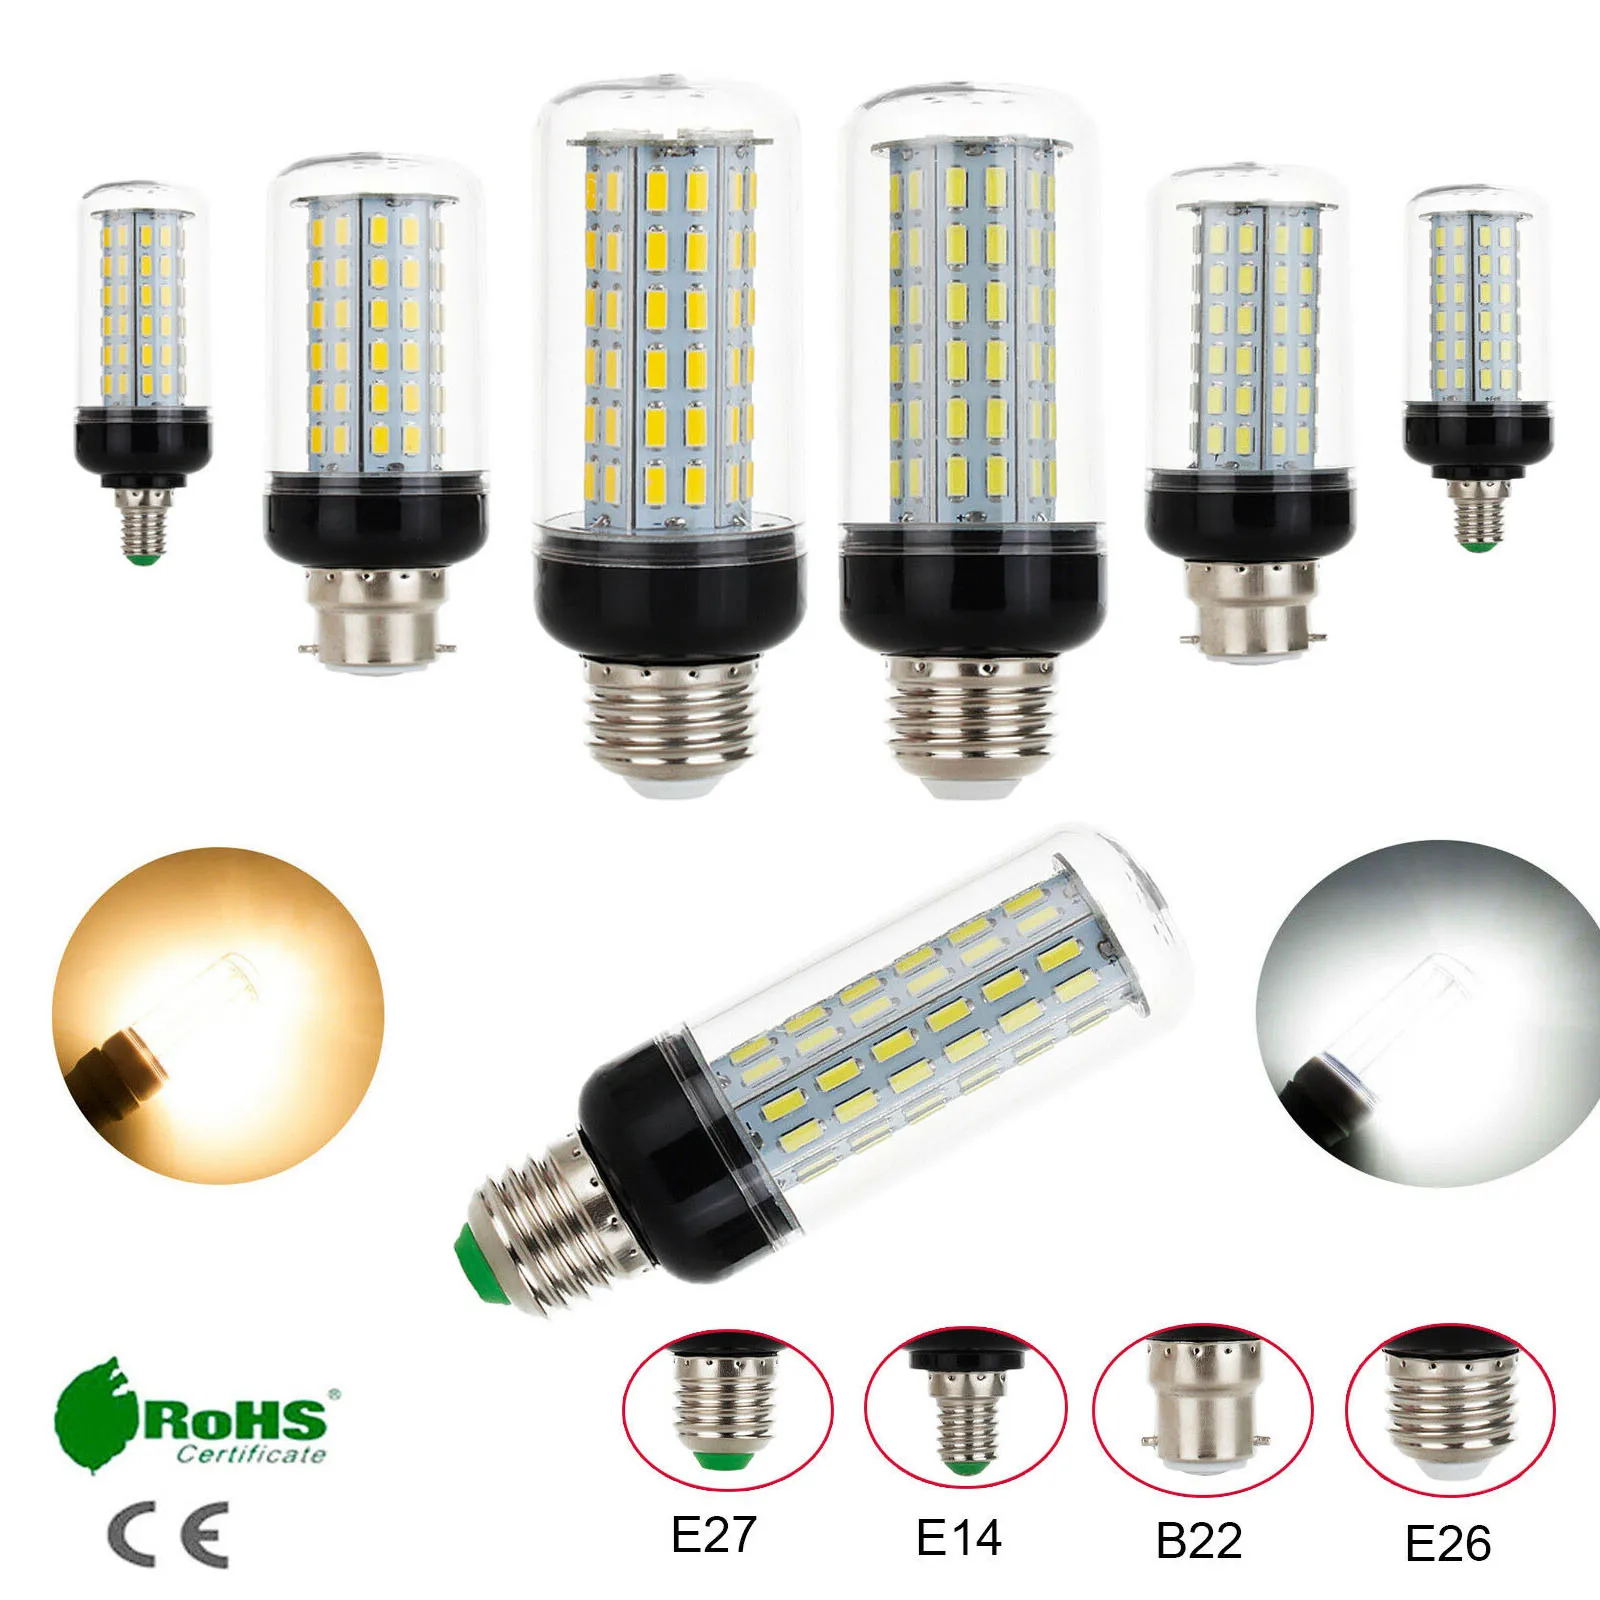 

LED Corn Bulb E26 E27 B22 E14 32W 7030 SMD Light Lamp AC 110V 220V 100W Halogen Lamps Equivalent For Home Decor Ampoule Lights